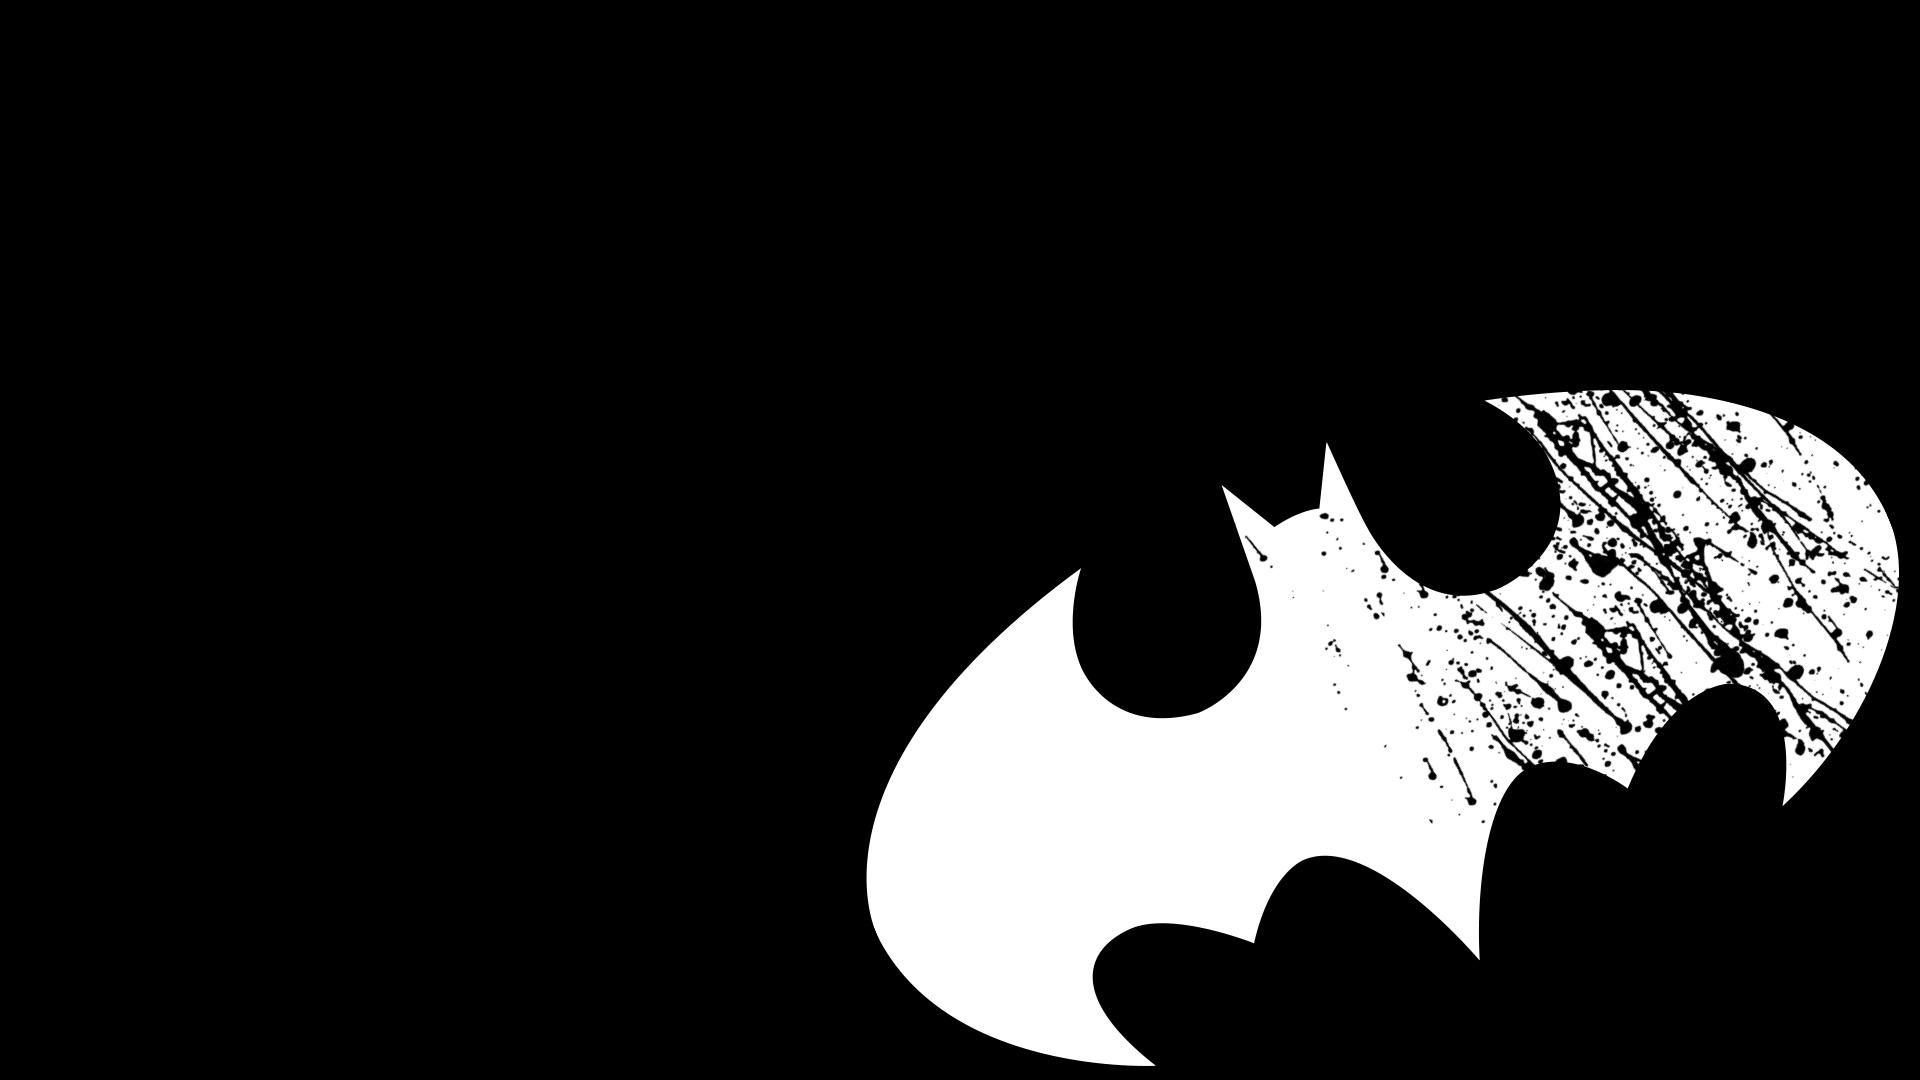 Batman Logo wallpaper For Free Download (HD 1080p)